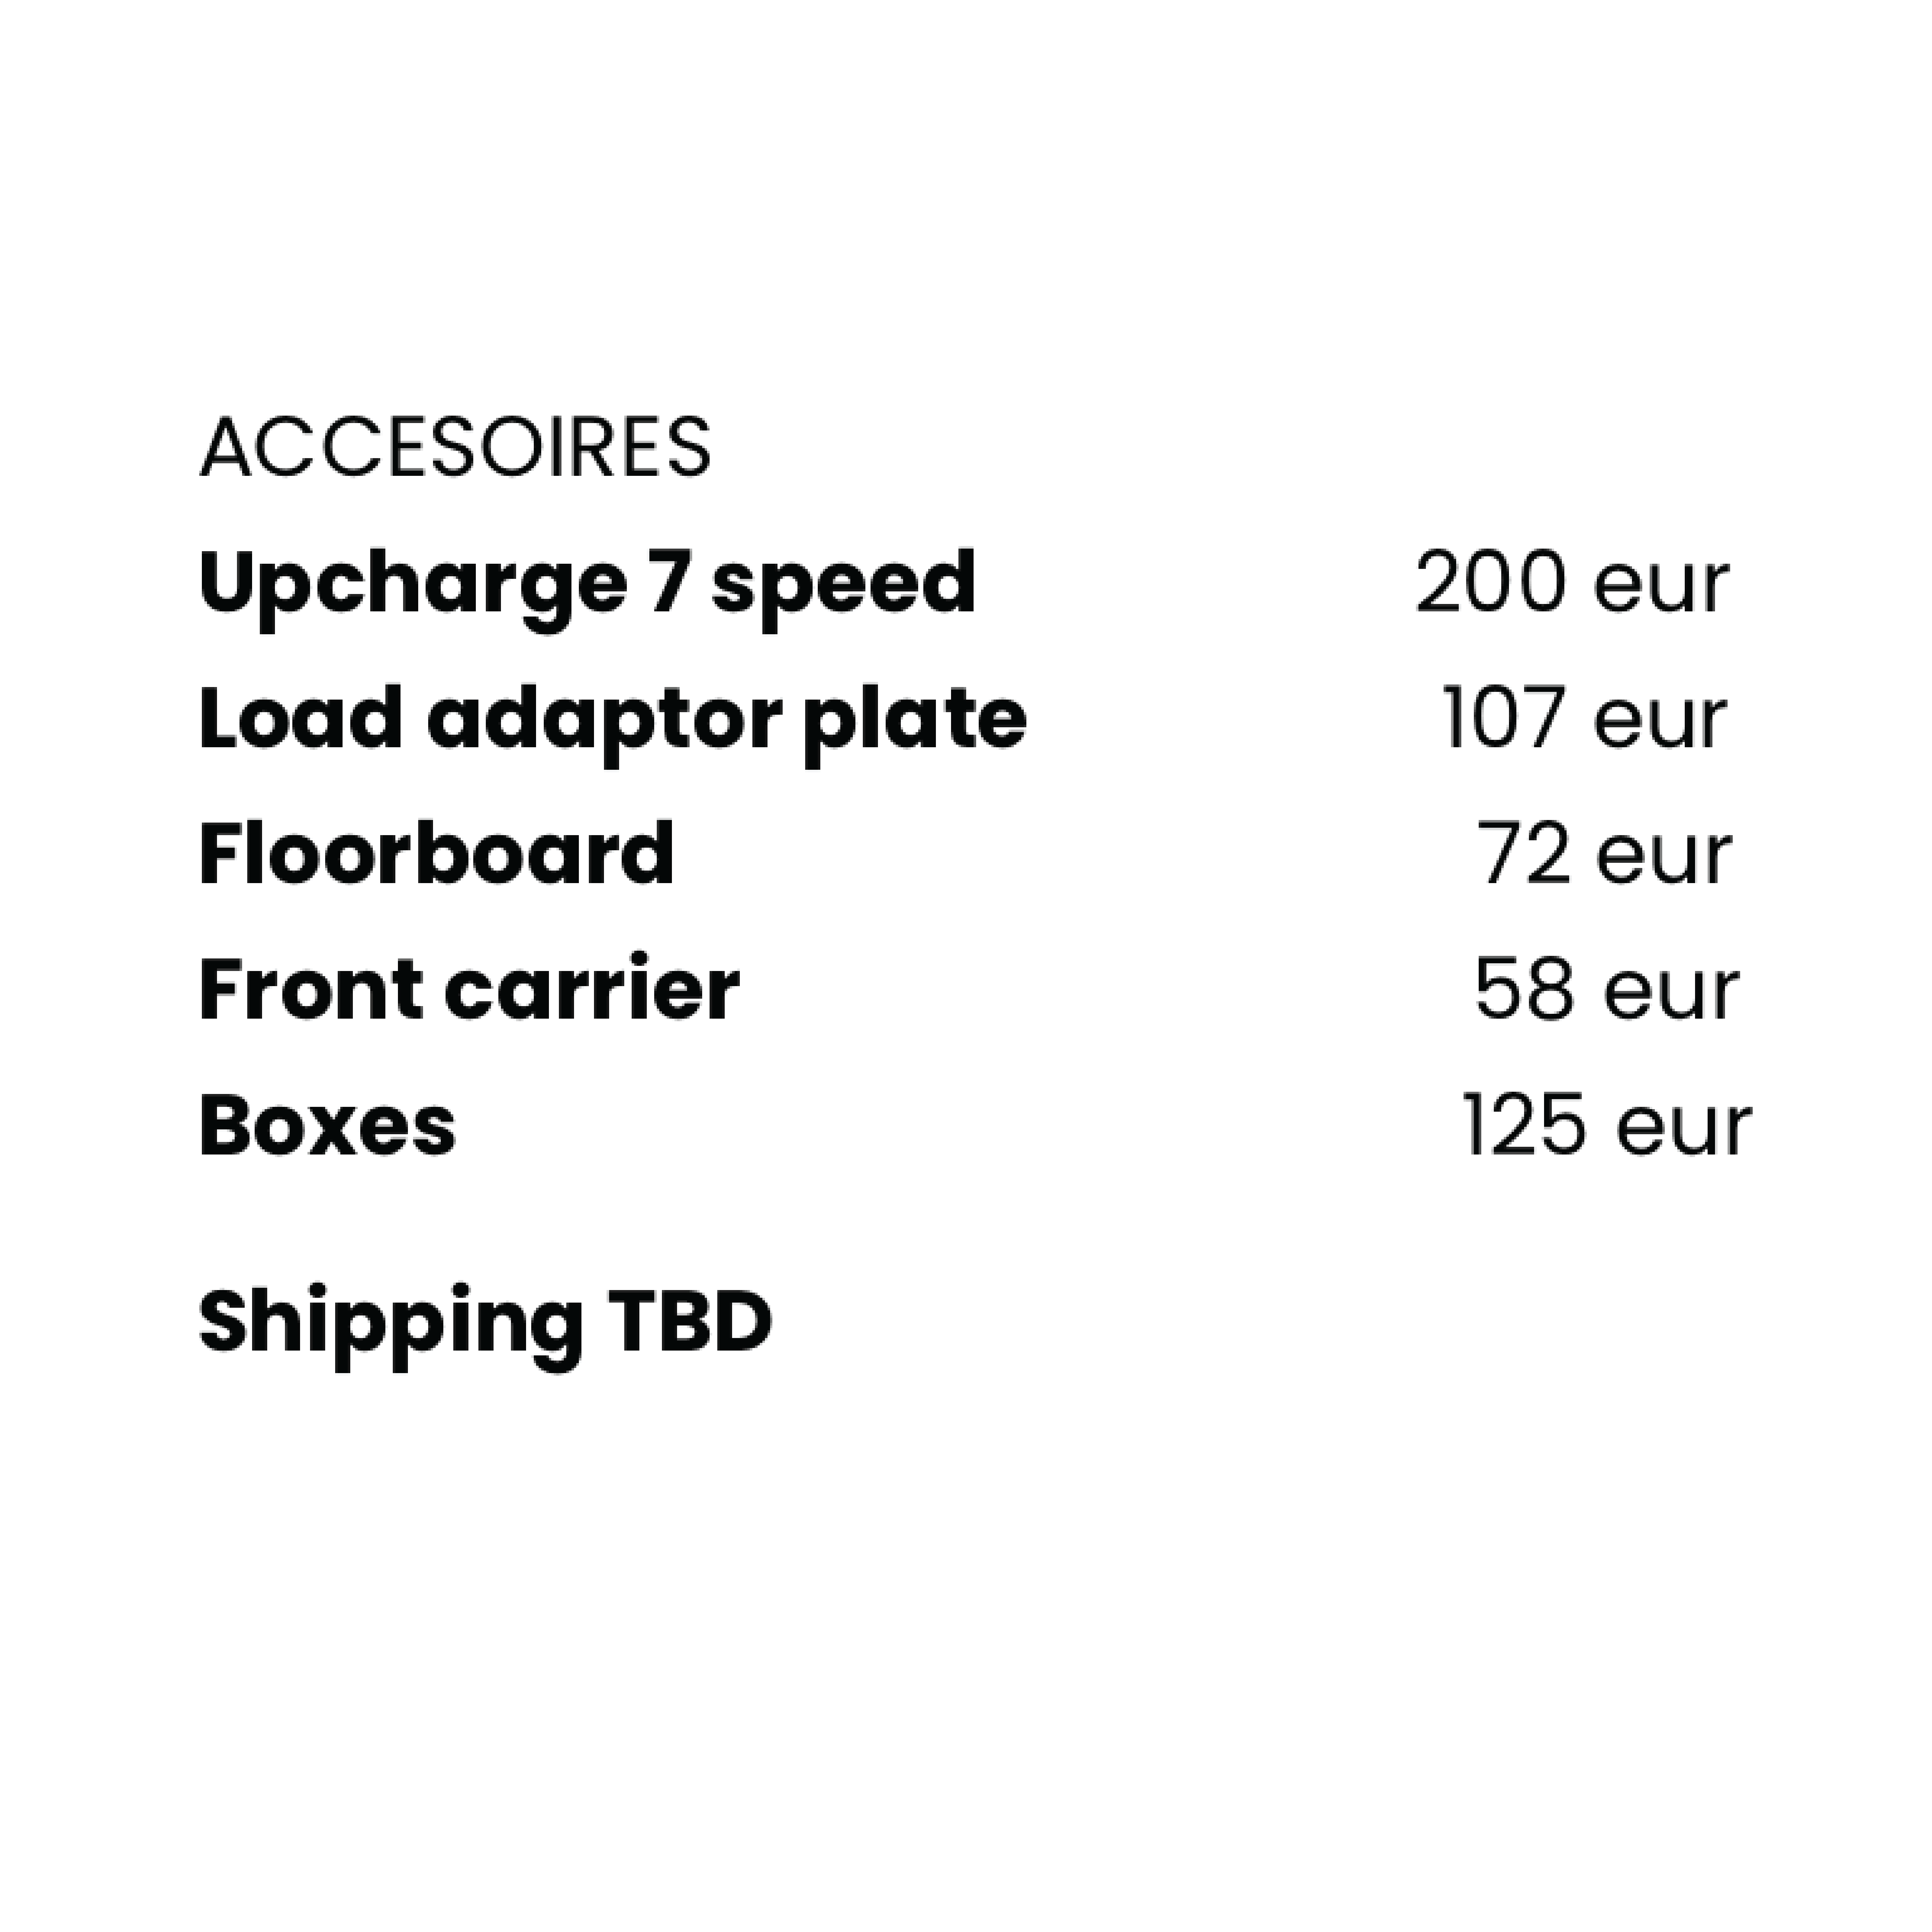 ACCESOIRES Upcharge 7 speed 200 eur Load adaptor plate 107 eur Floorbo